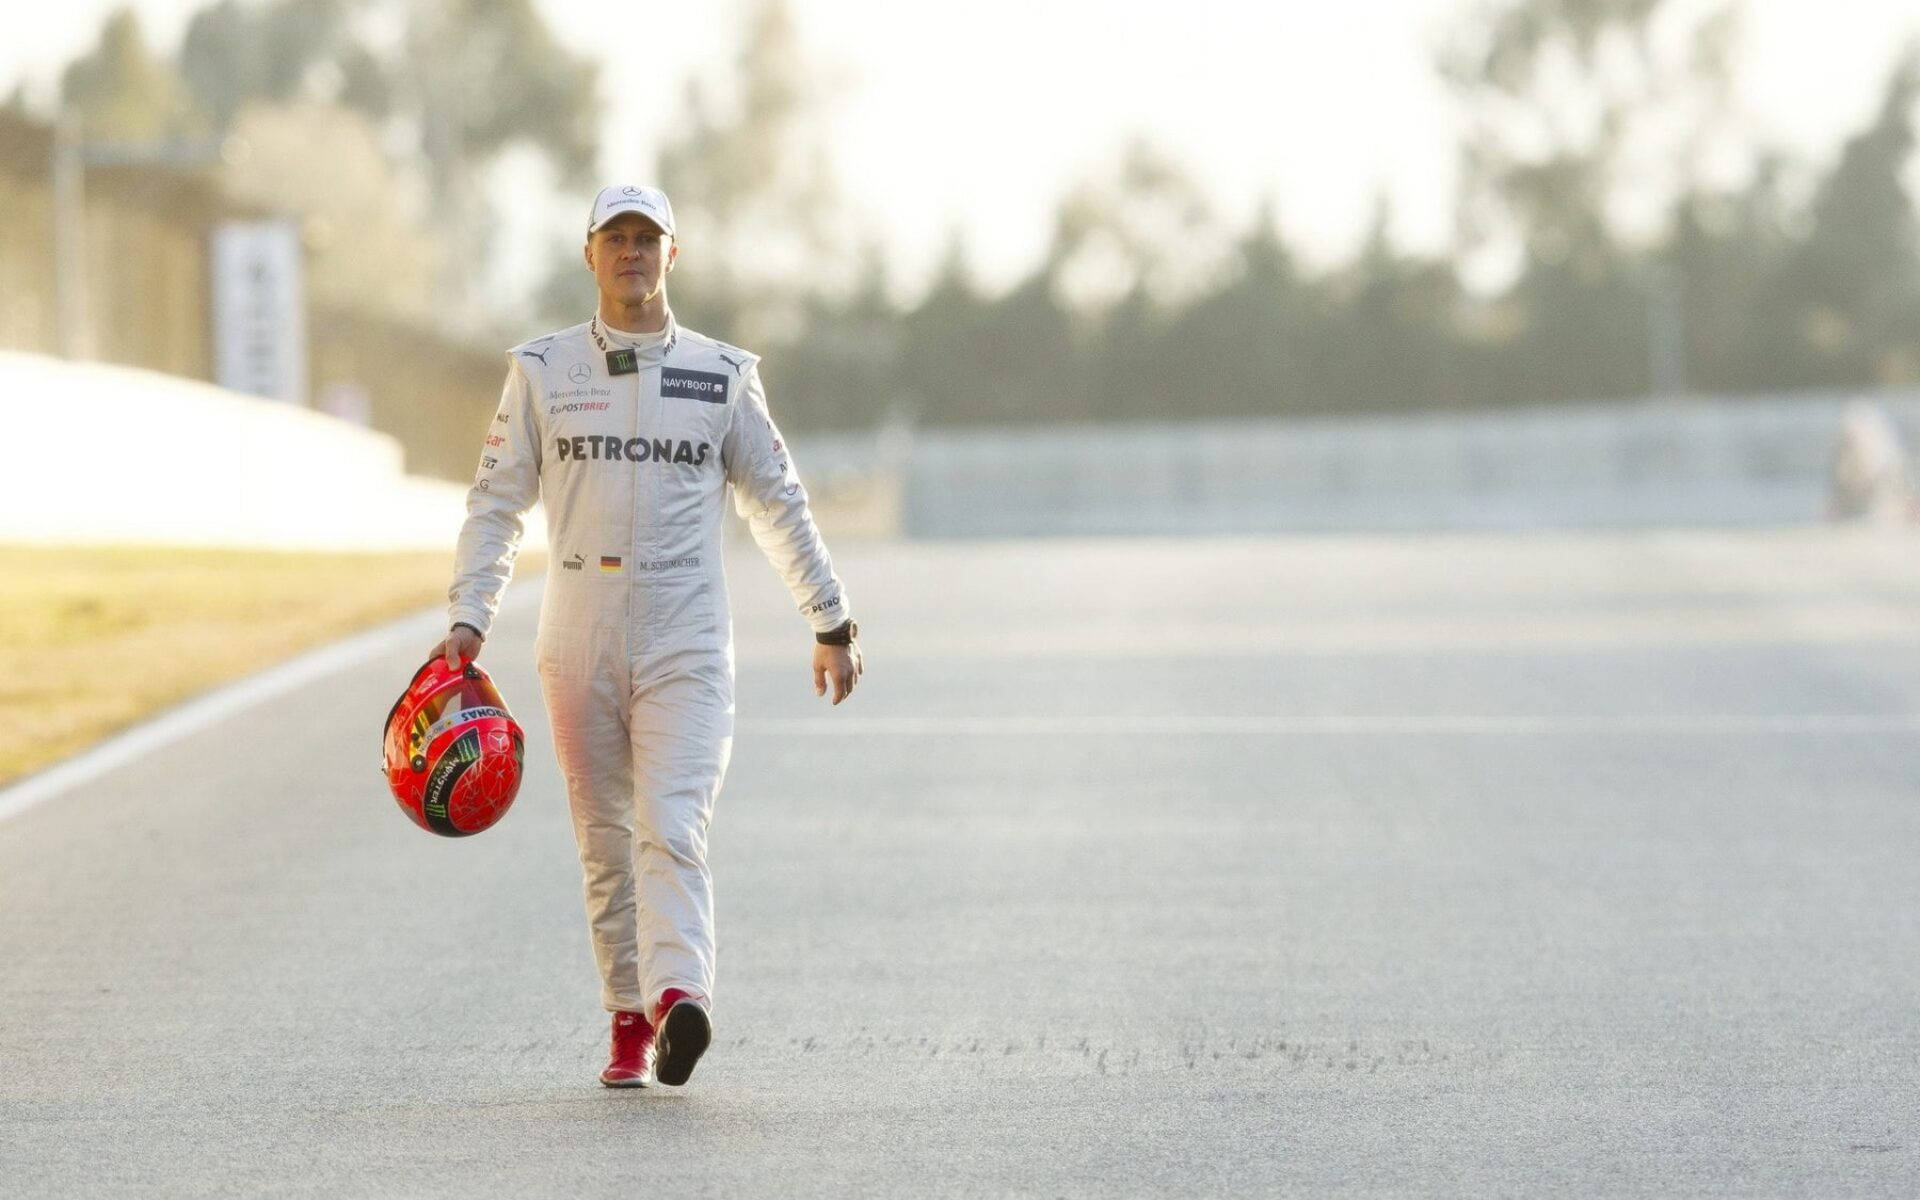 All-white Petronas Michael Schumacher